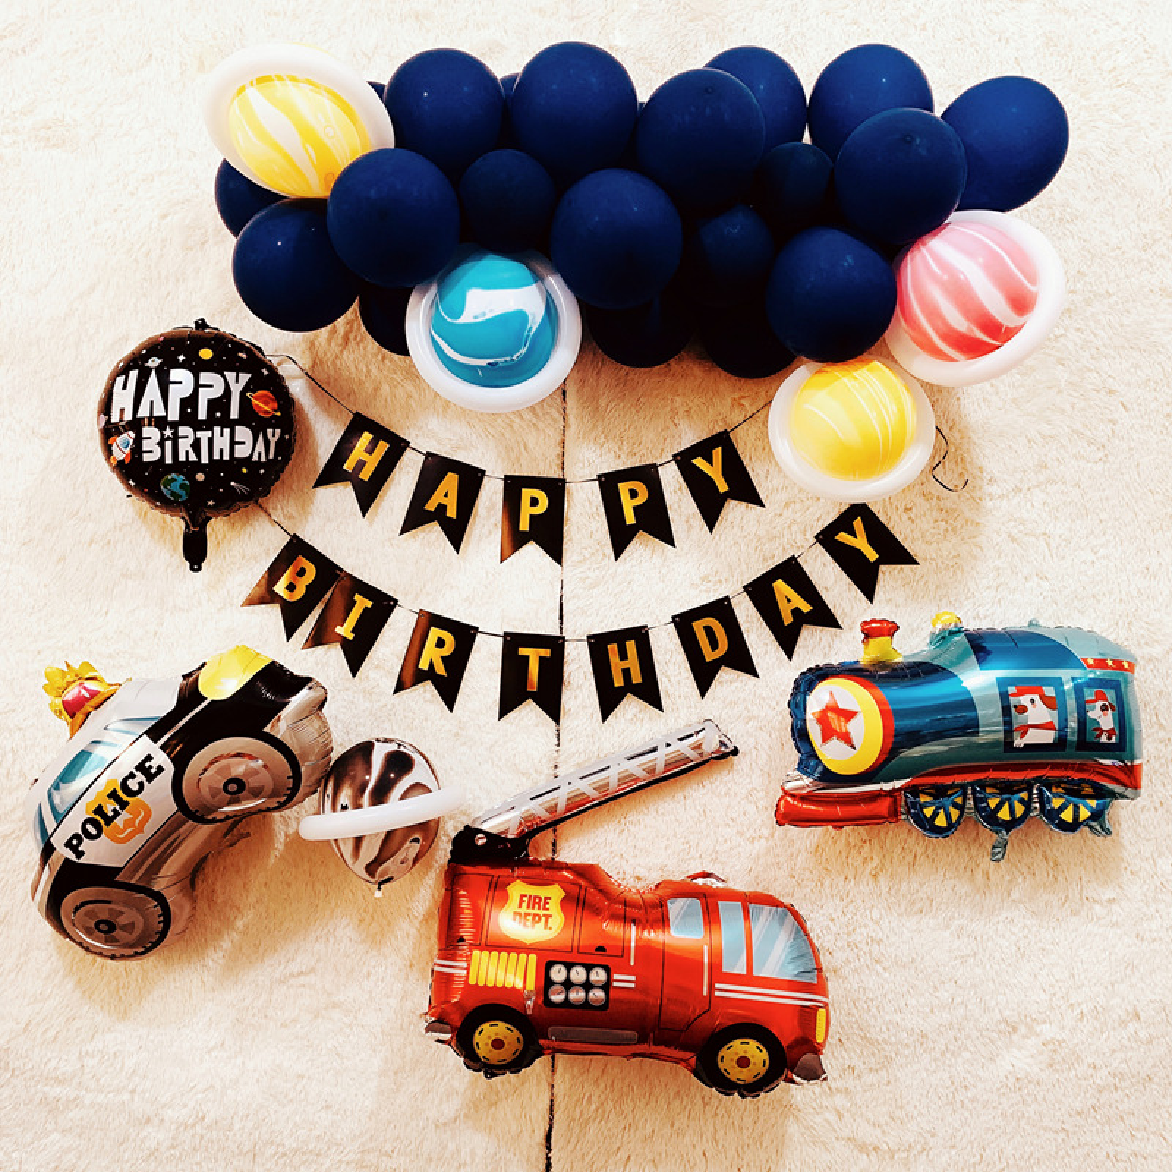 Party Decoration Balloon - Foil Balloon - Mini Train